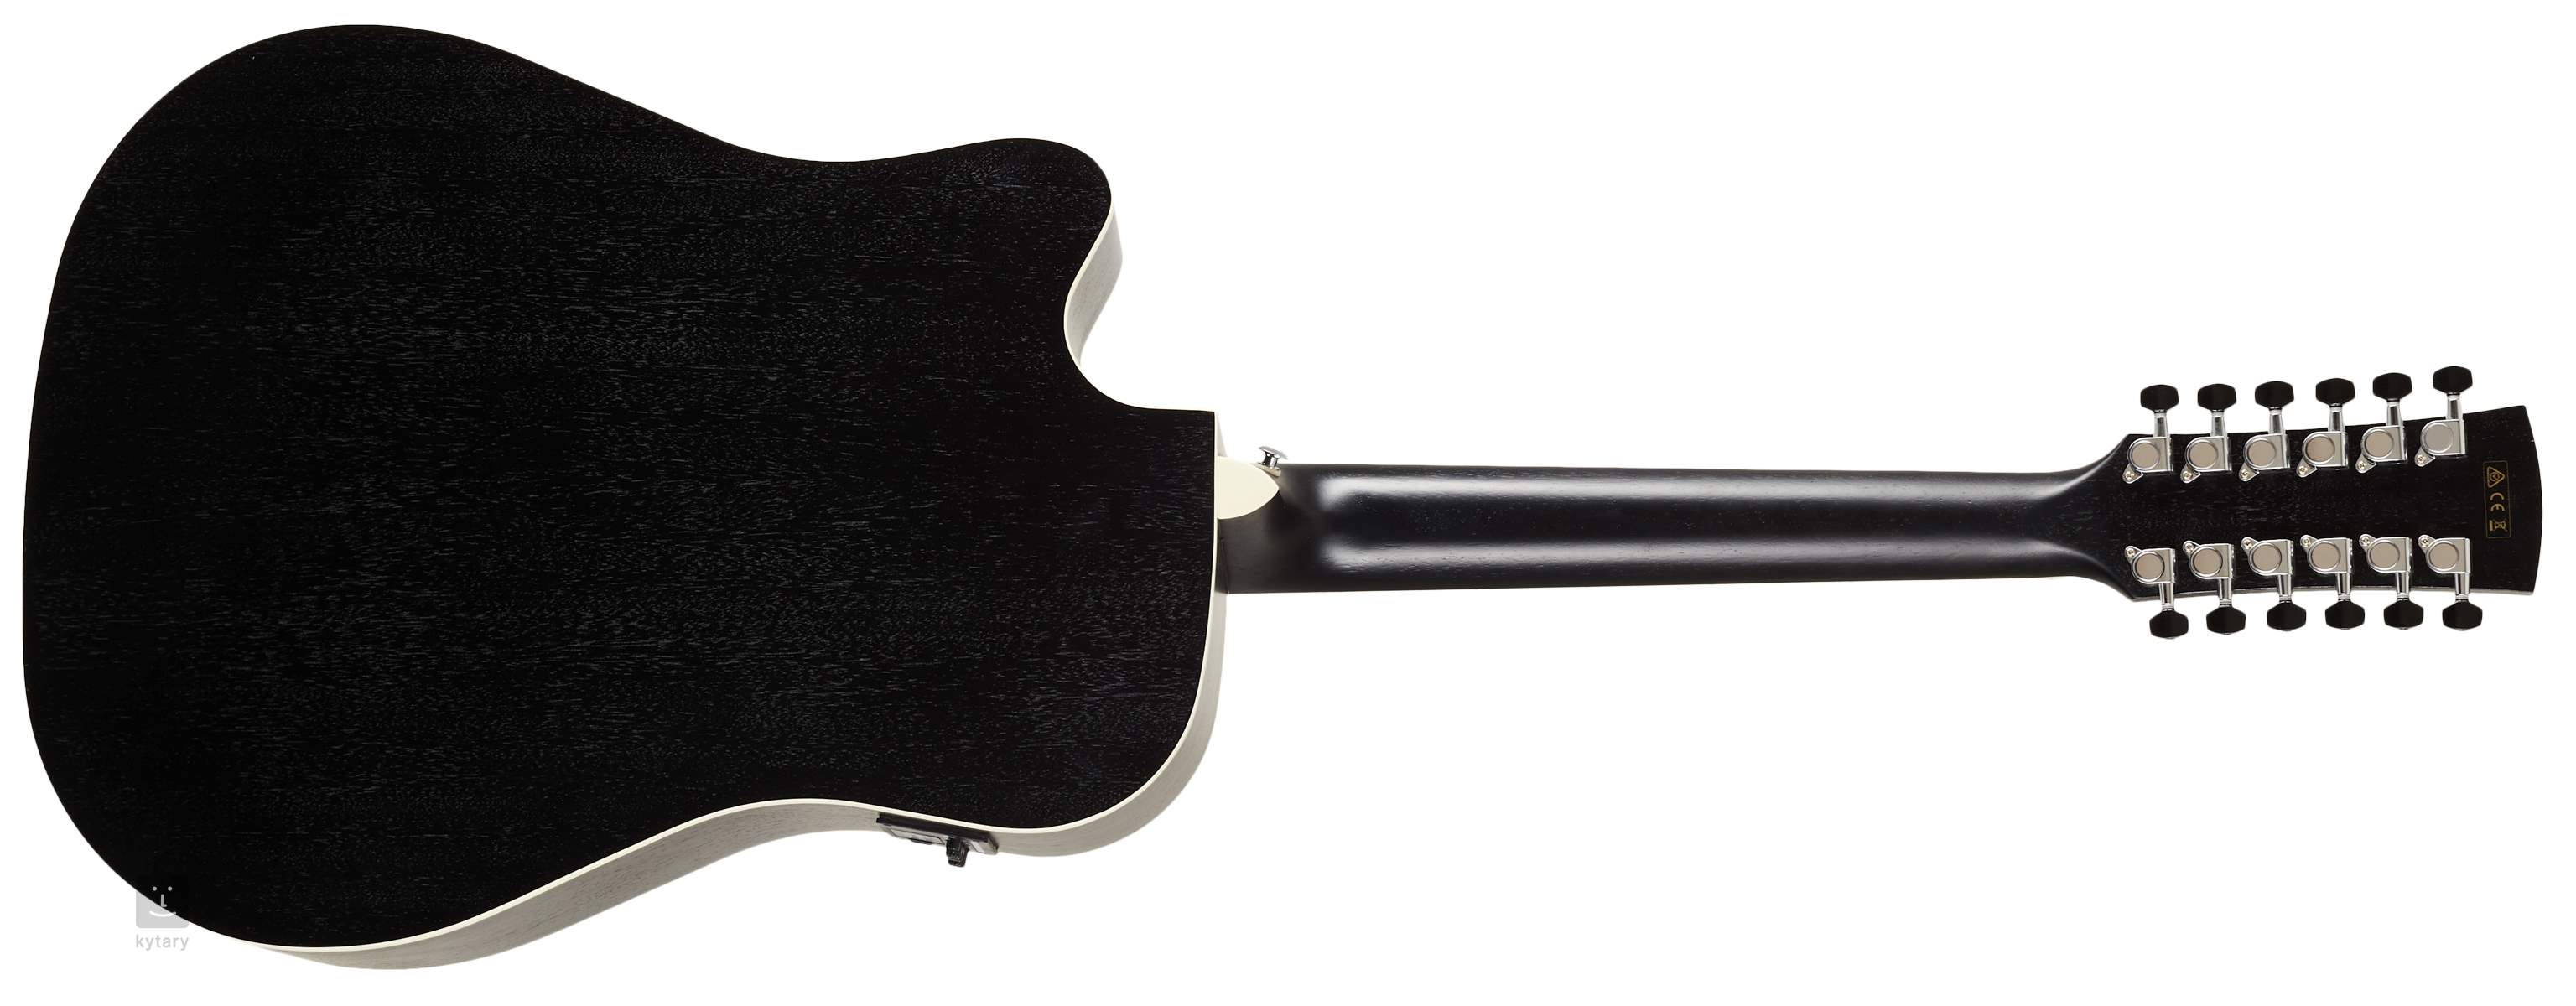 IBANEZ AW8412CE-WK 12-snarige gitaar